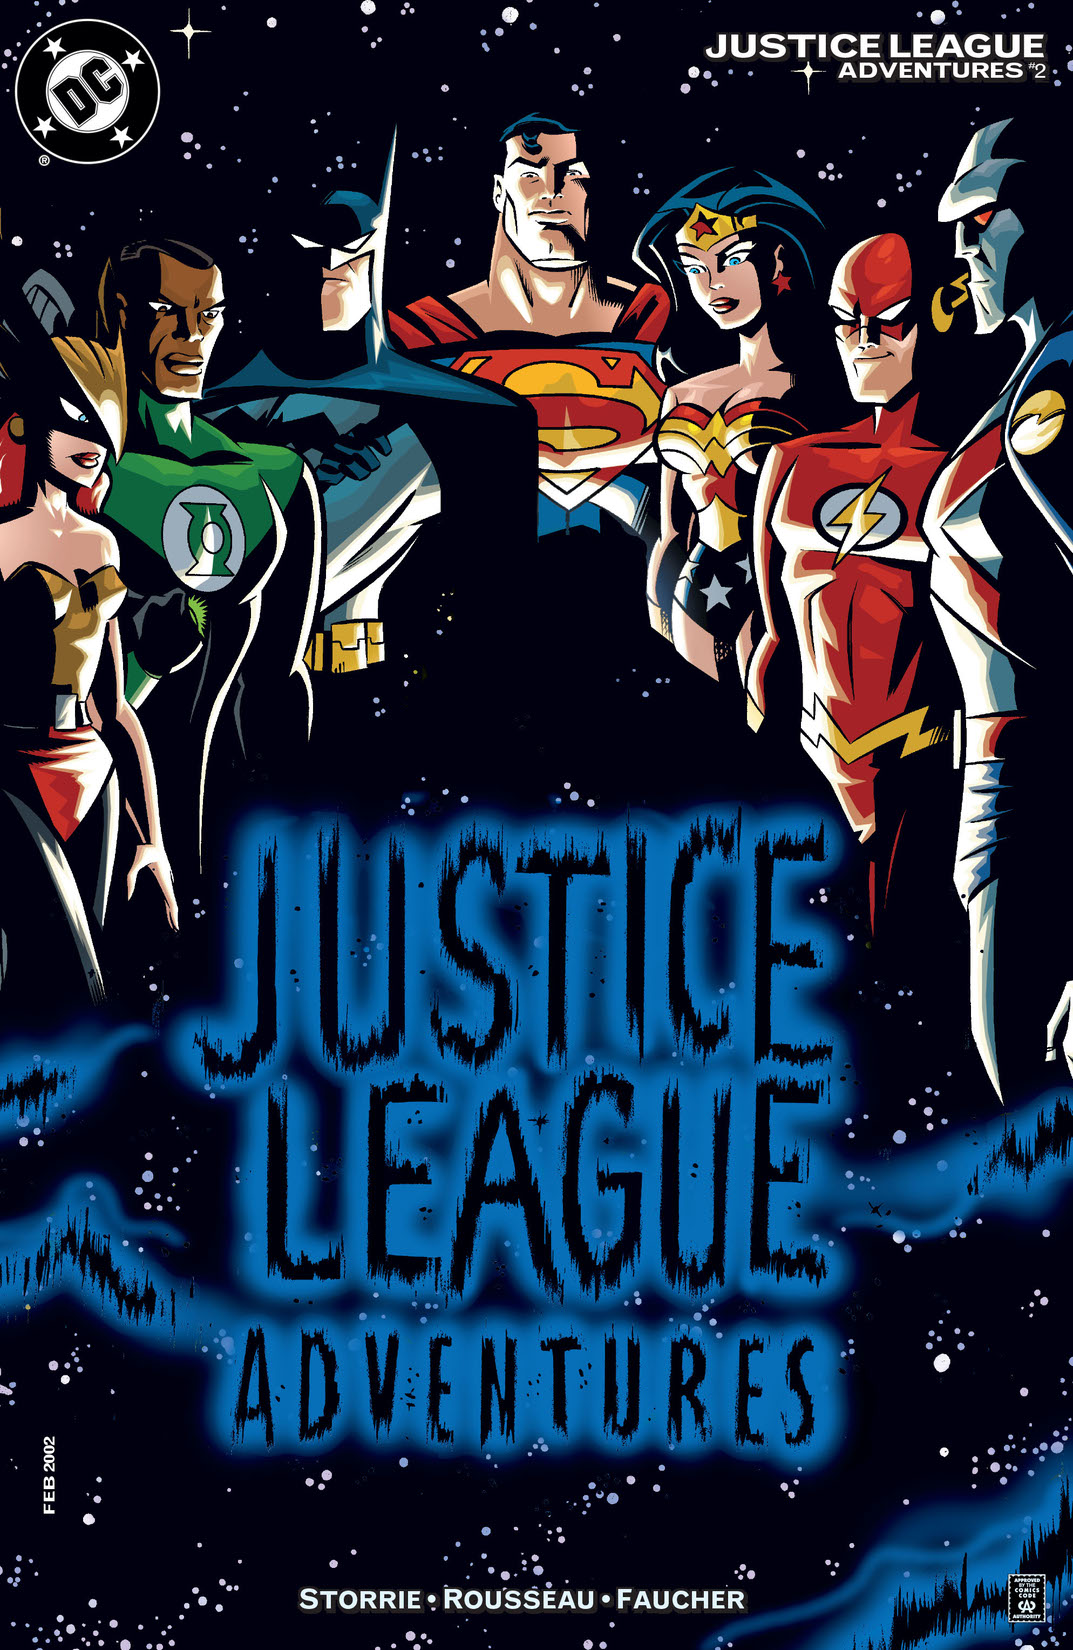 Justice League Adventures #2 preview images